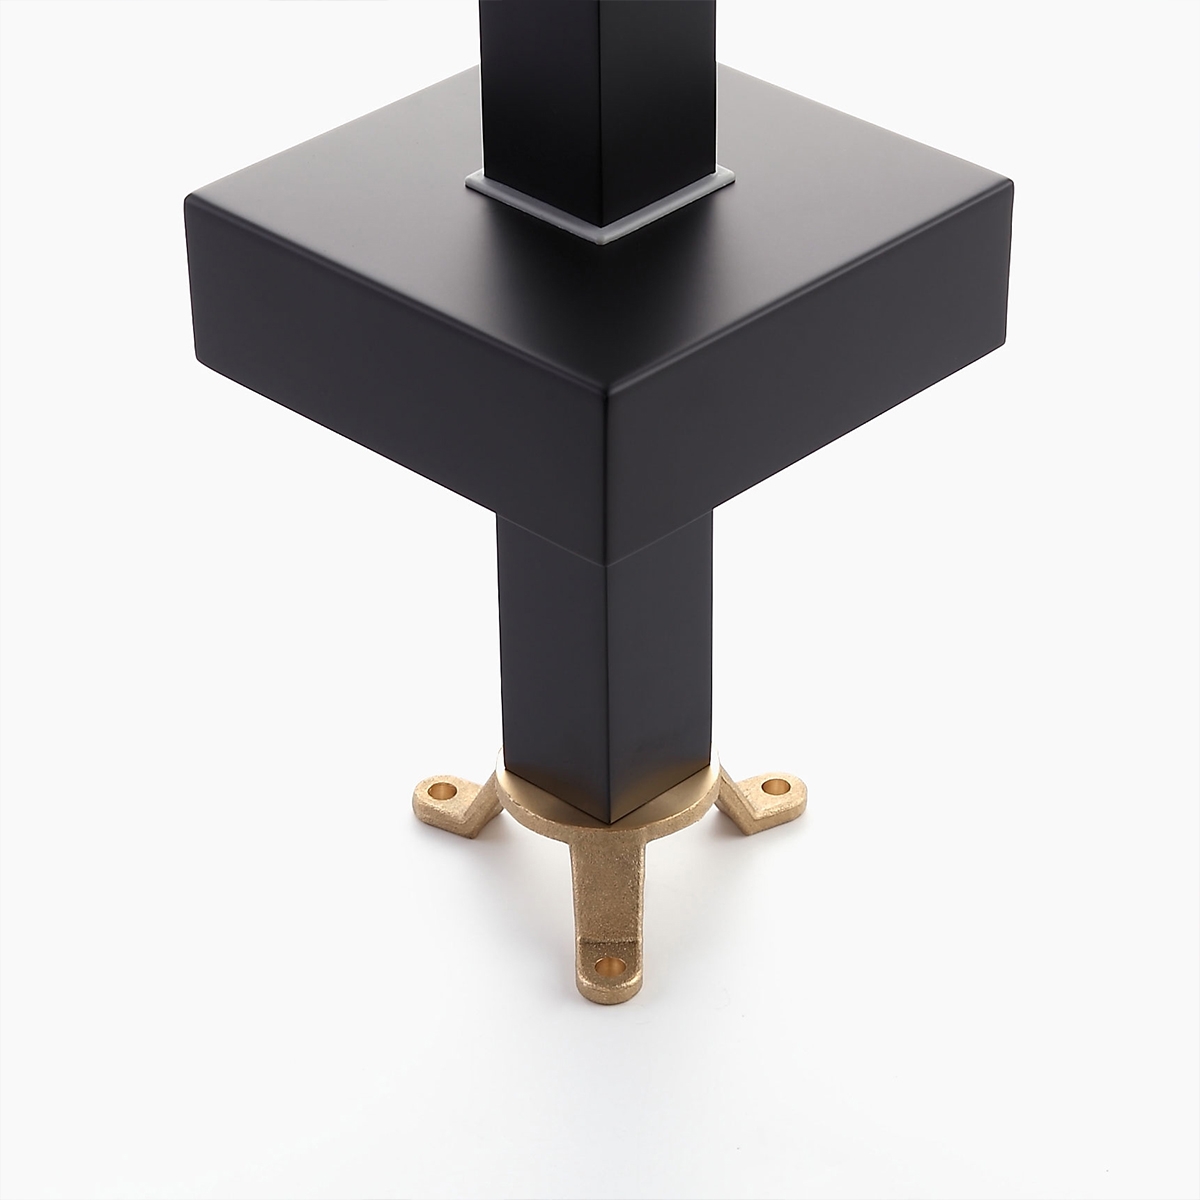 Dree Modern Matte Black Floor Mounted Freestanding Tub Faucet with Handheld Shower 1-Handle Solid Brass